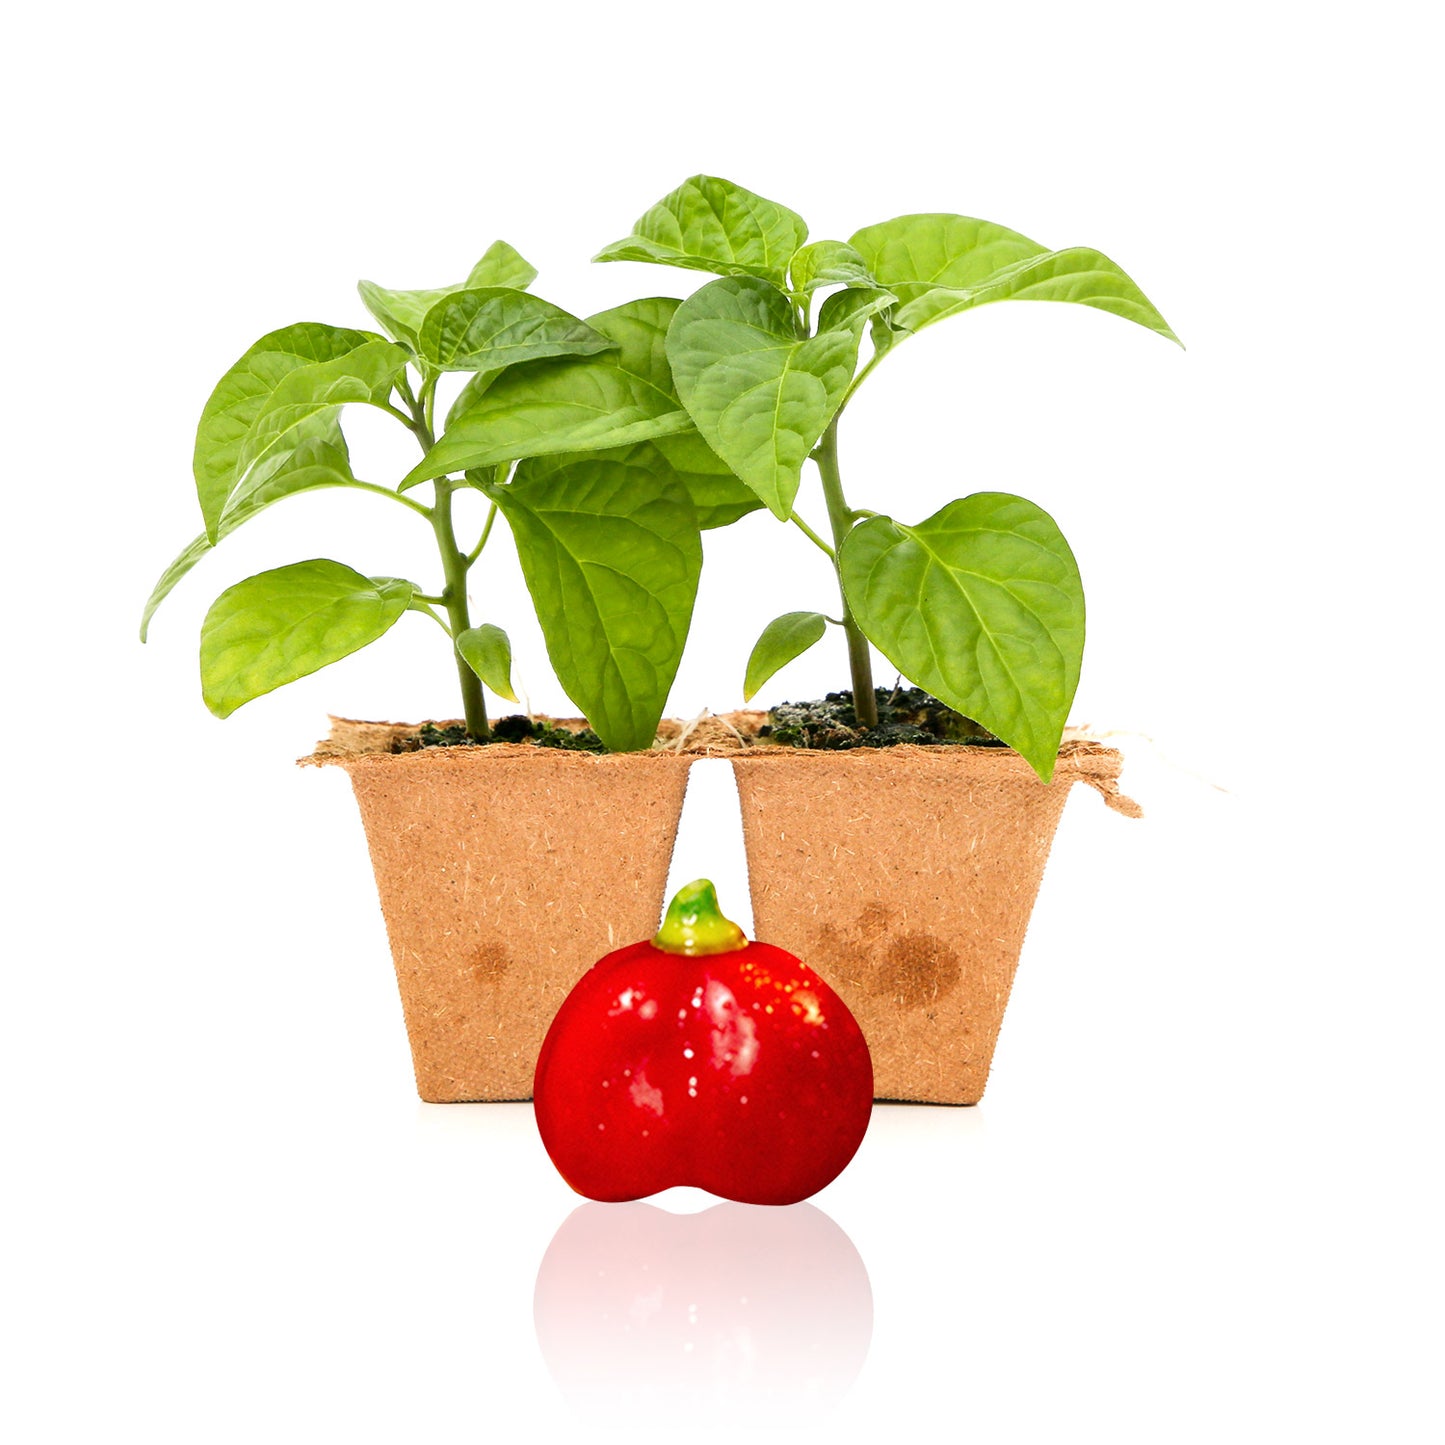 Pepper Joe's Butch T Trinidad Scorpion Pepper Plants for sale